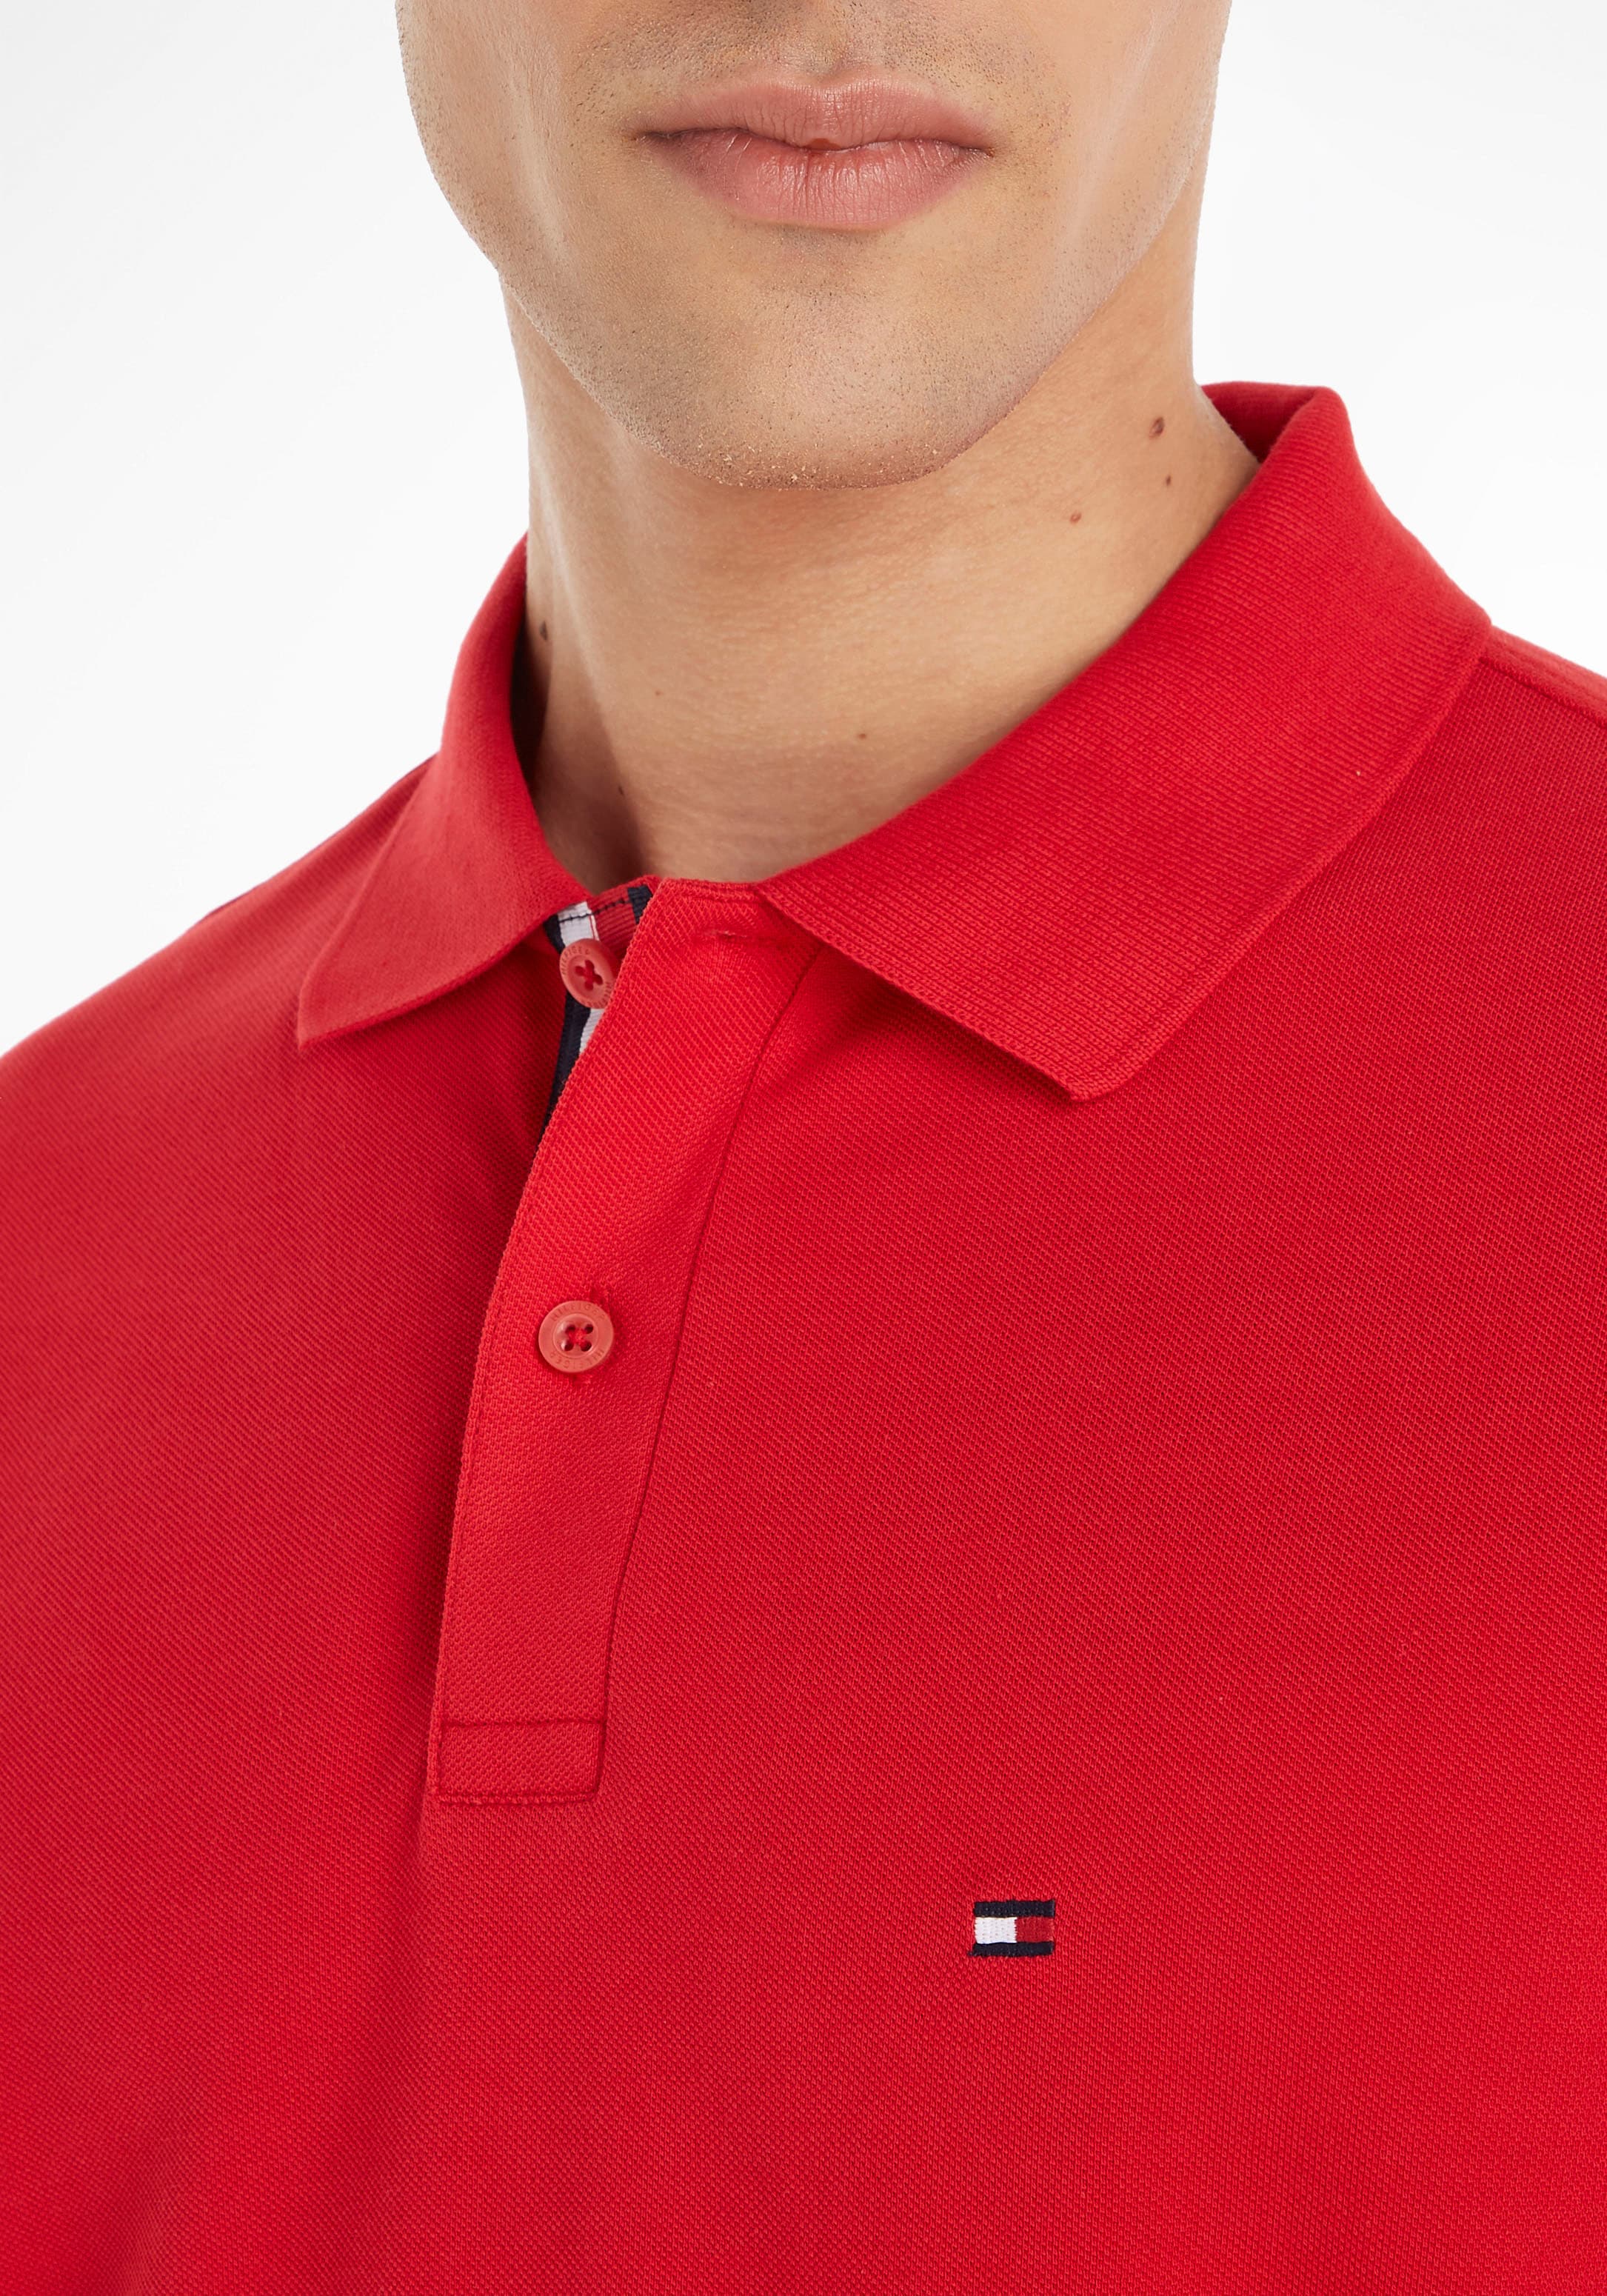 Logotape Tommy online PLACKET Kragen mit POLO«, TAPE »RWB Hilfiger kaufen Poloshirt am REGULAR